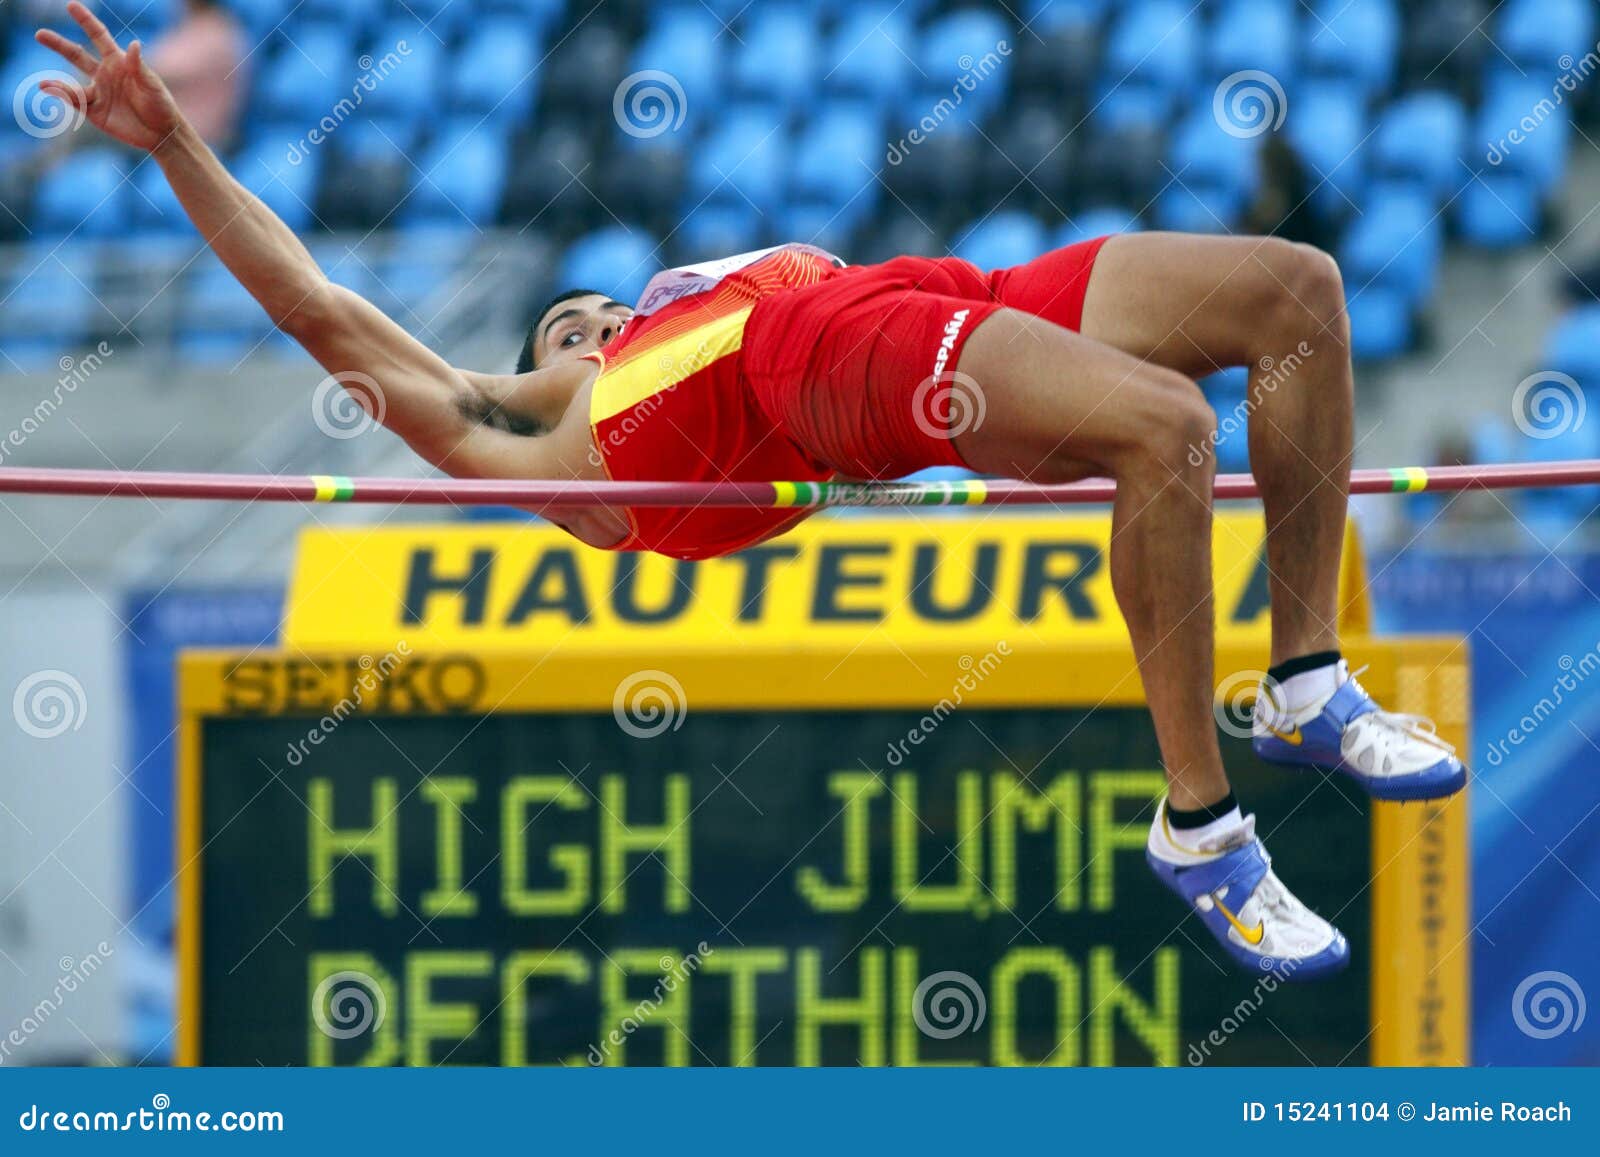 high jump decathlon